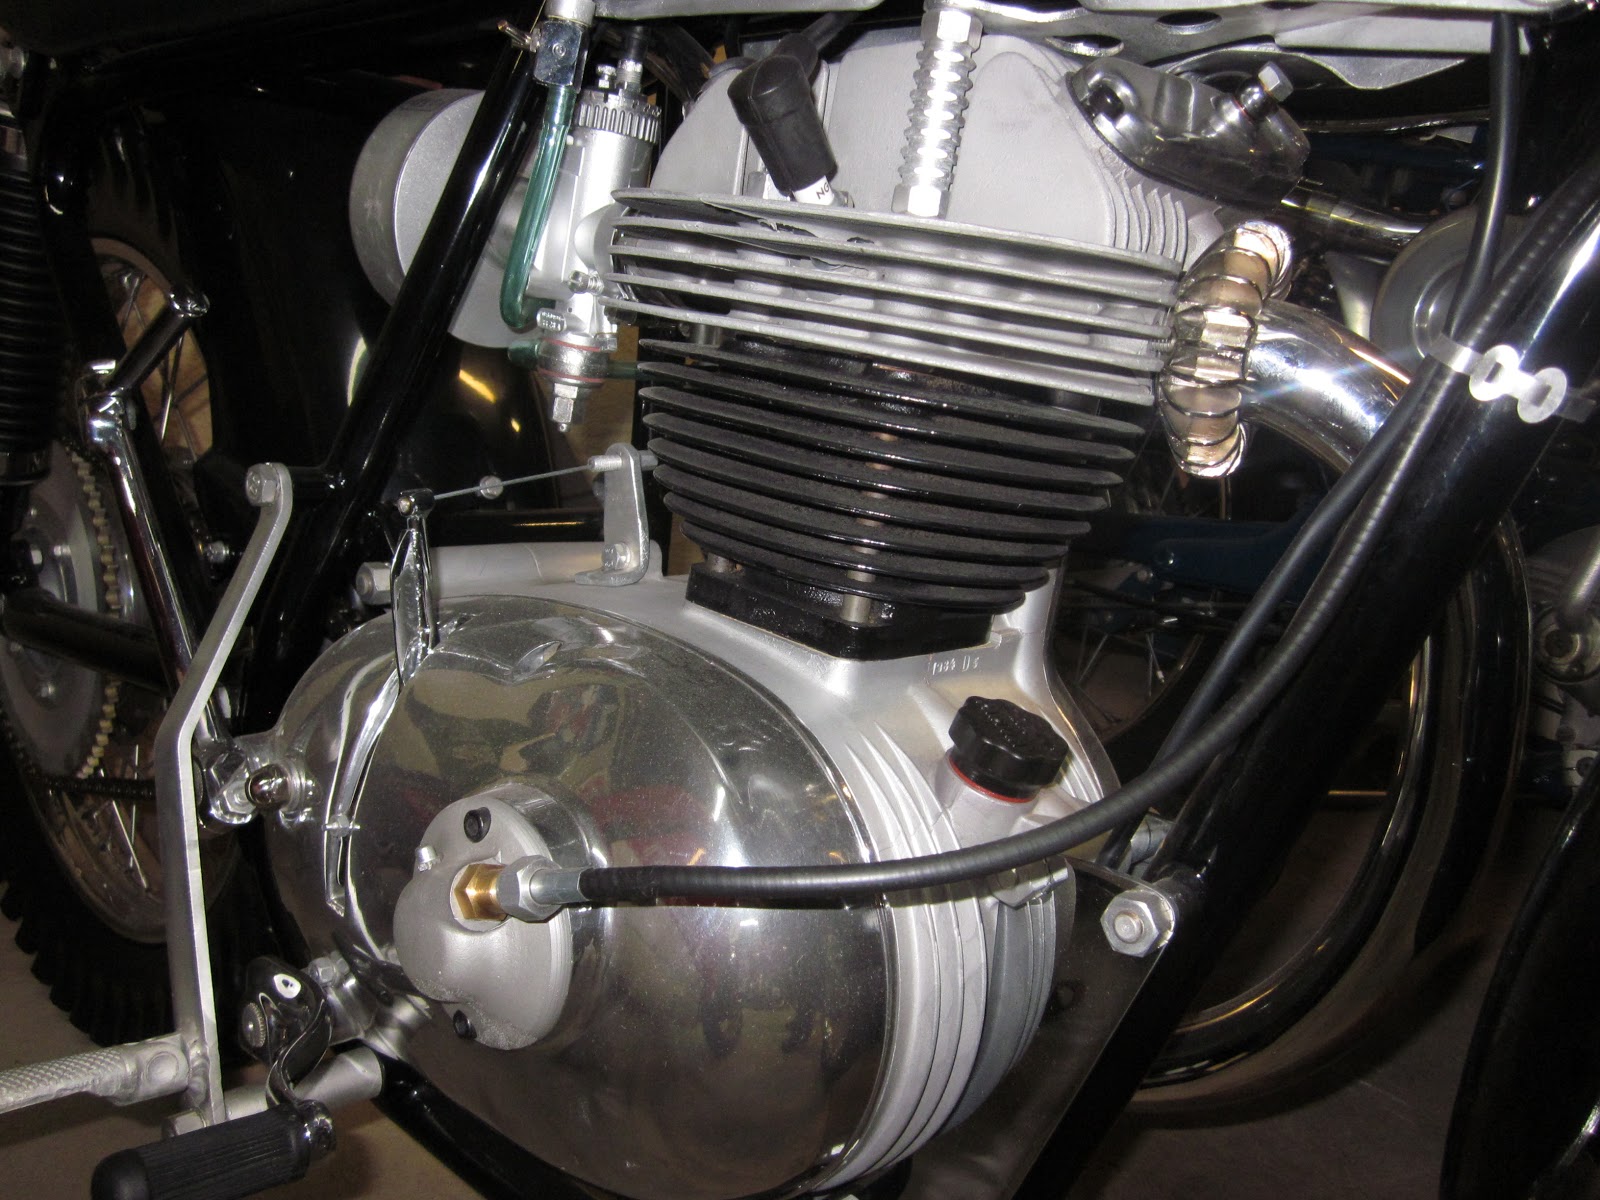 ... Moto Parilla Wildcat Scrambler on Display at Vintage Moto Denver, Co